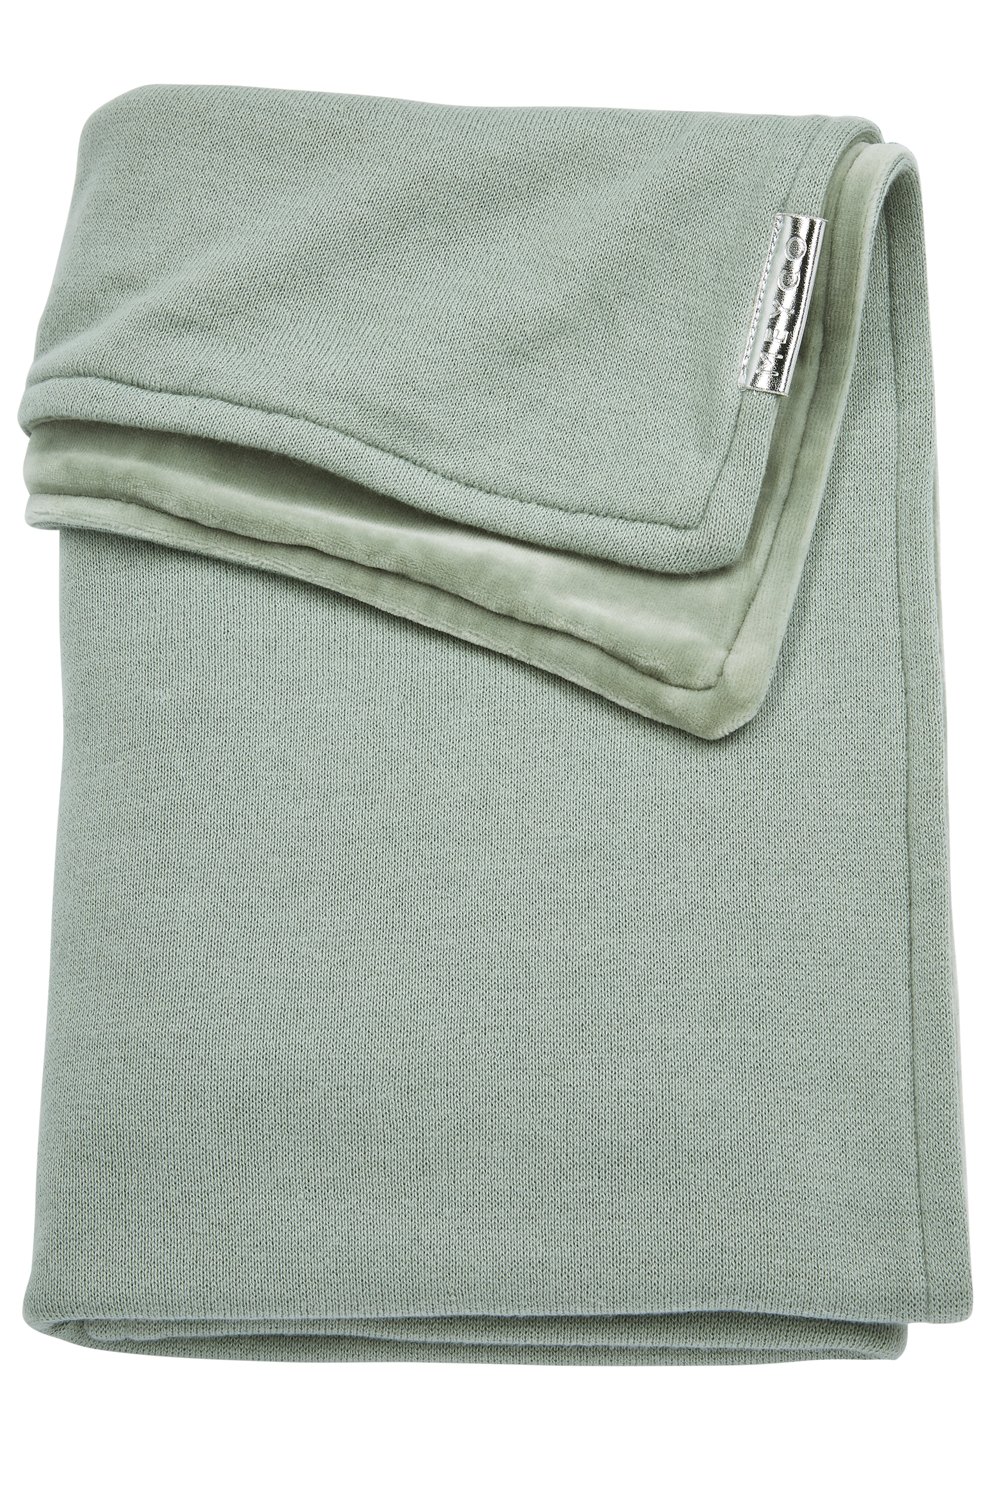 Babydecke klein Velvet Knit Basic - Stone Green - 75x100cm